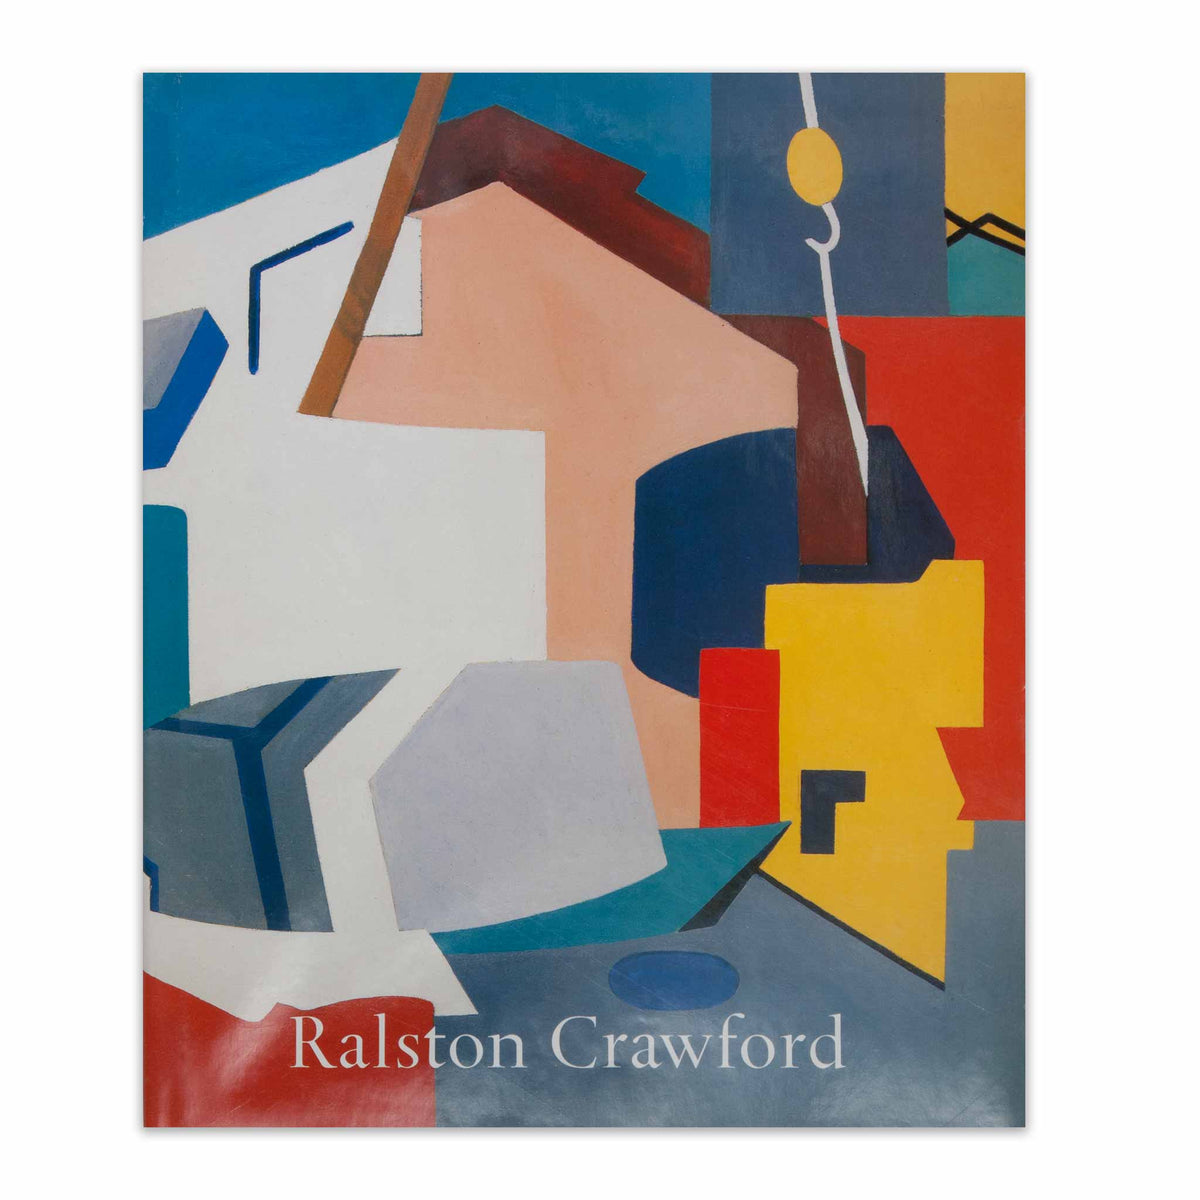 Ralston Crawford